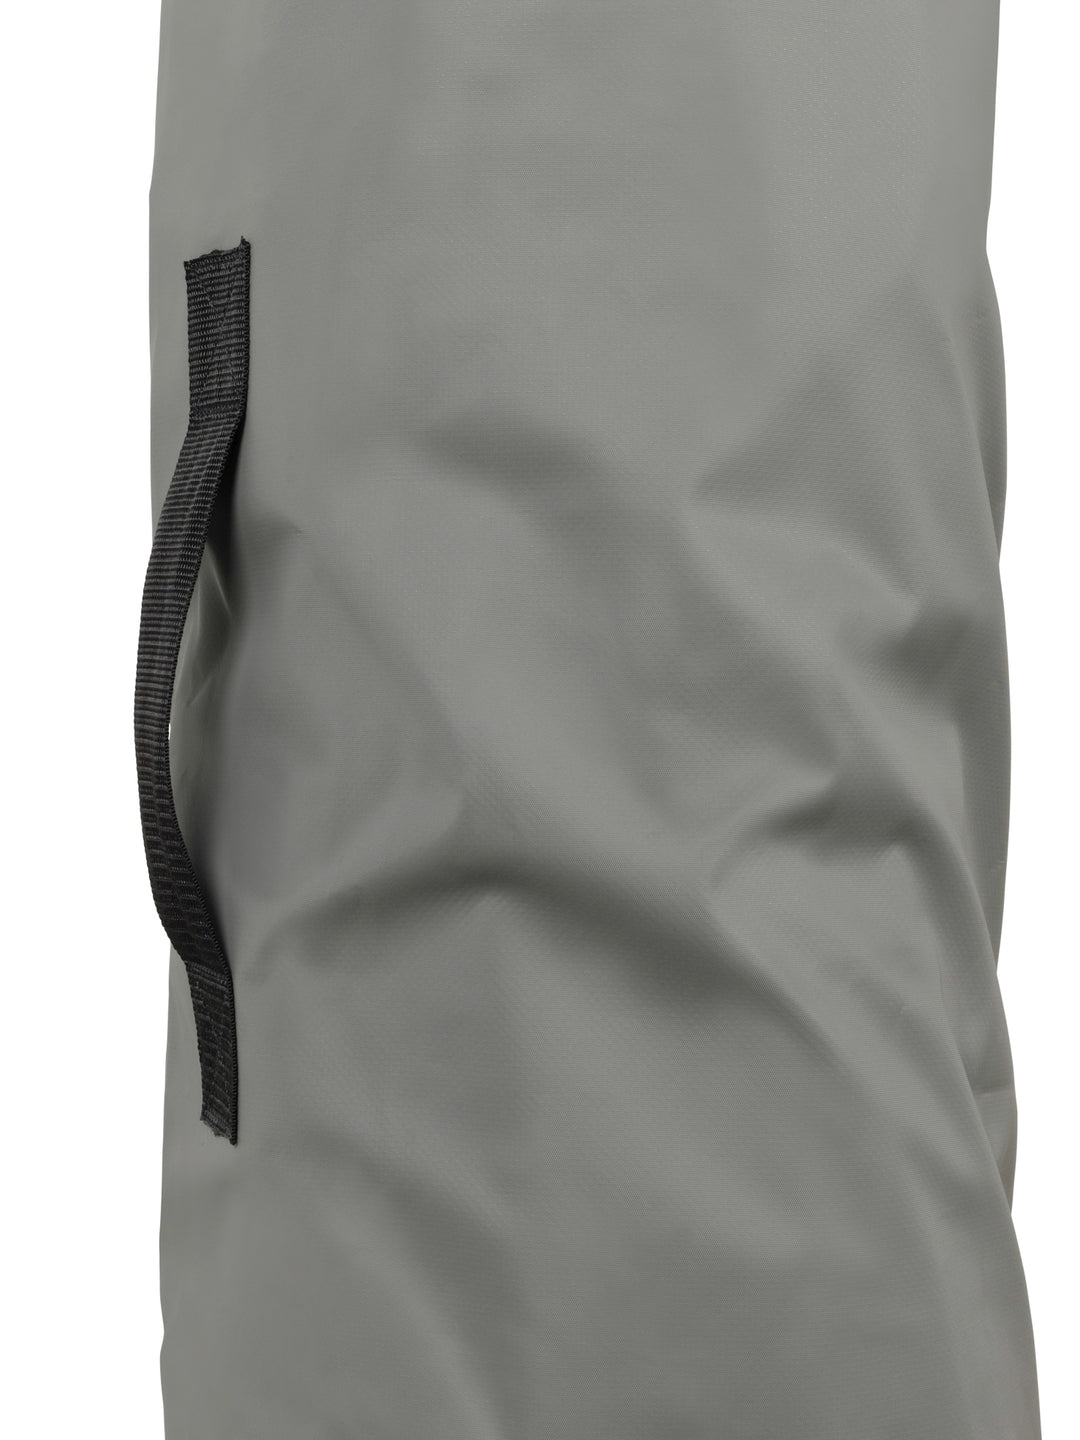 Original Parasol Co protective cover and bag